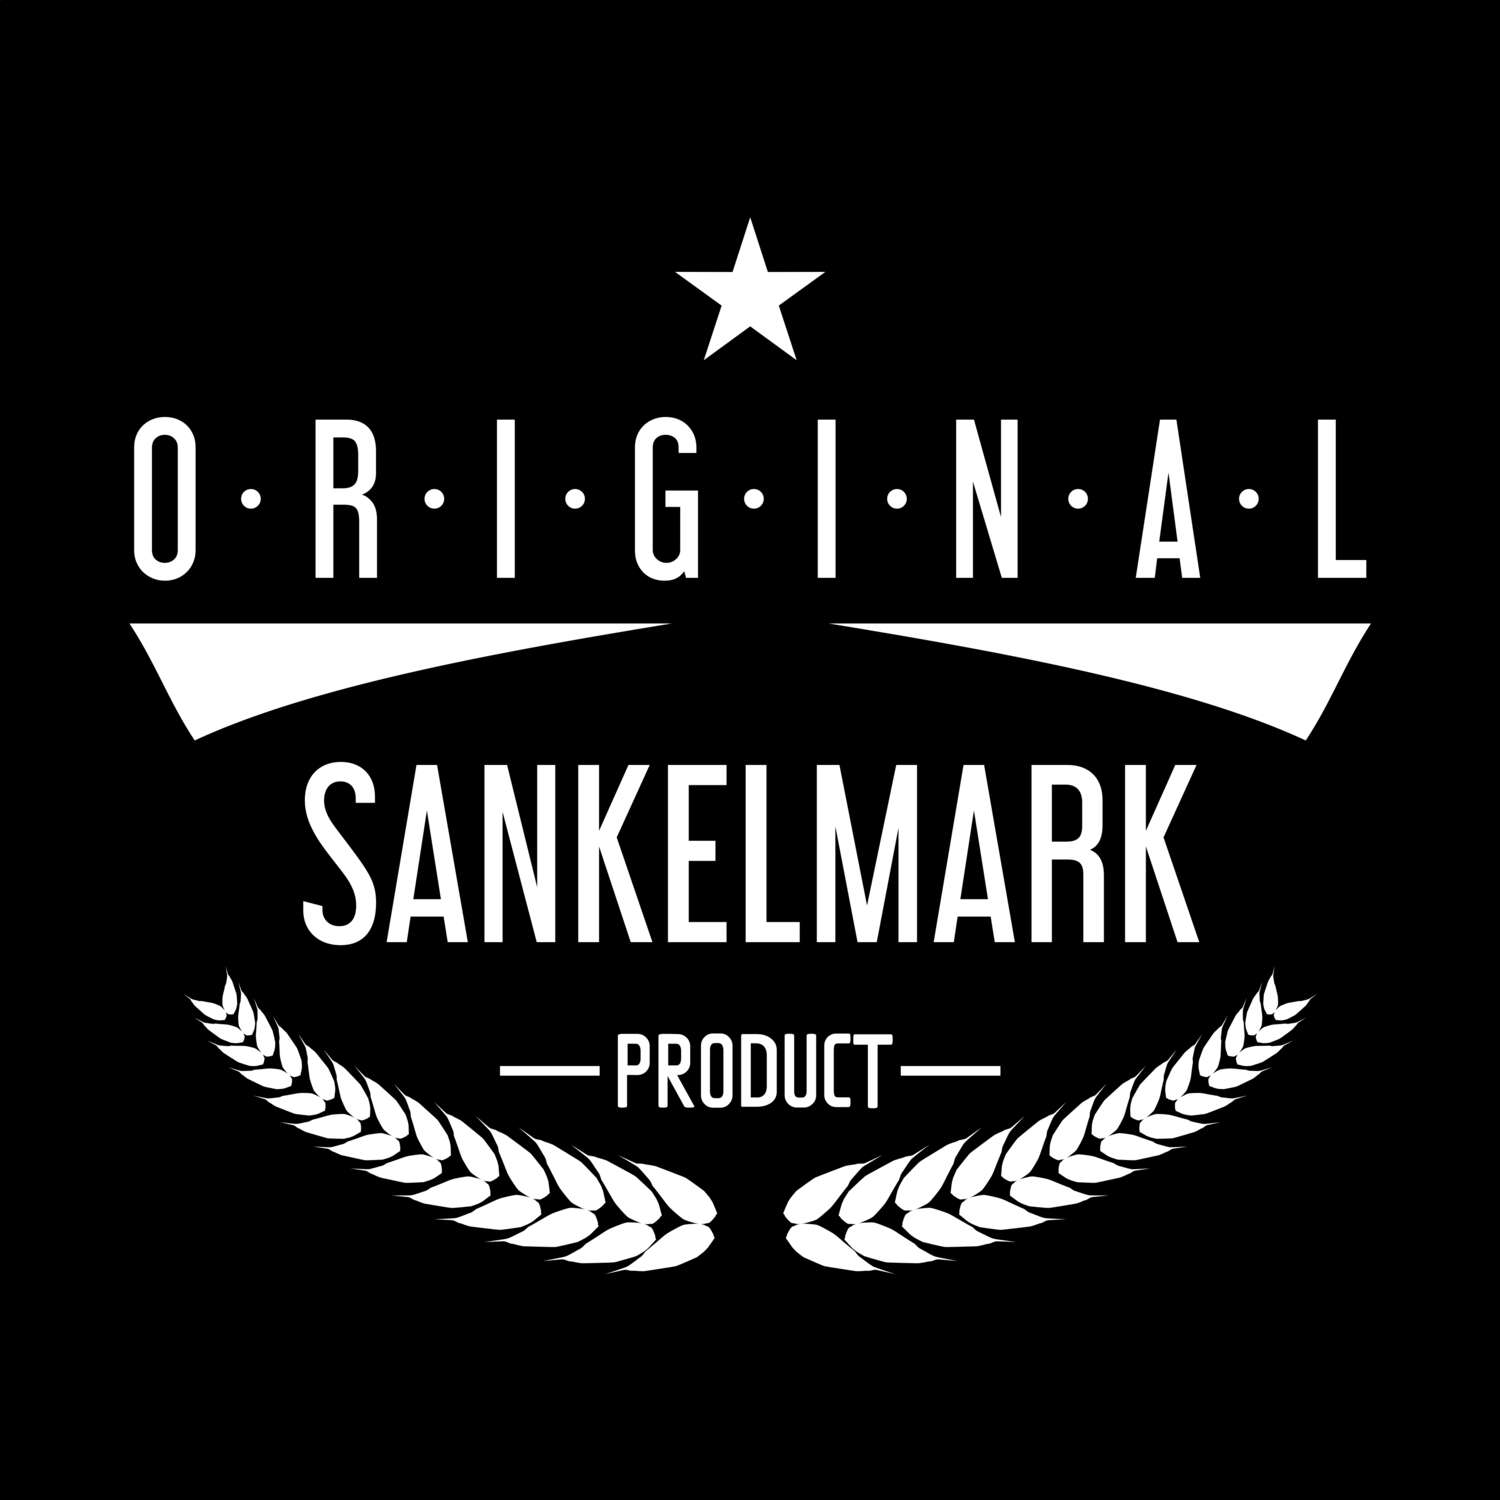 Sankelmark T-Shirt »Original Product«